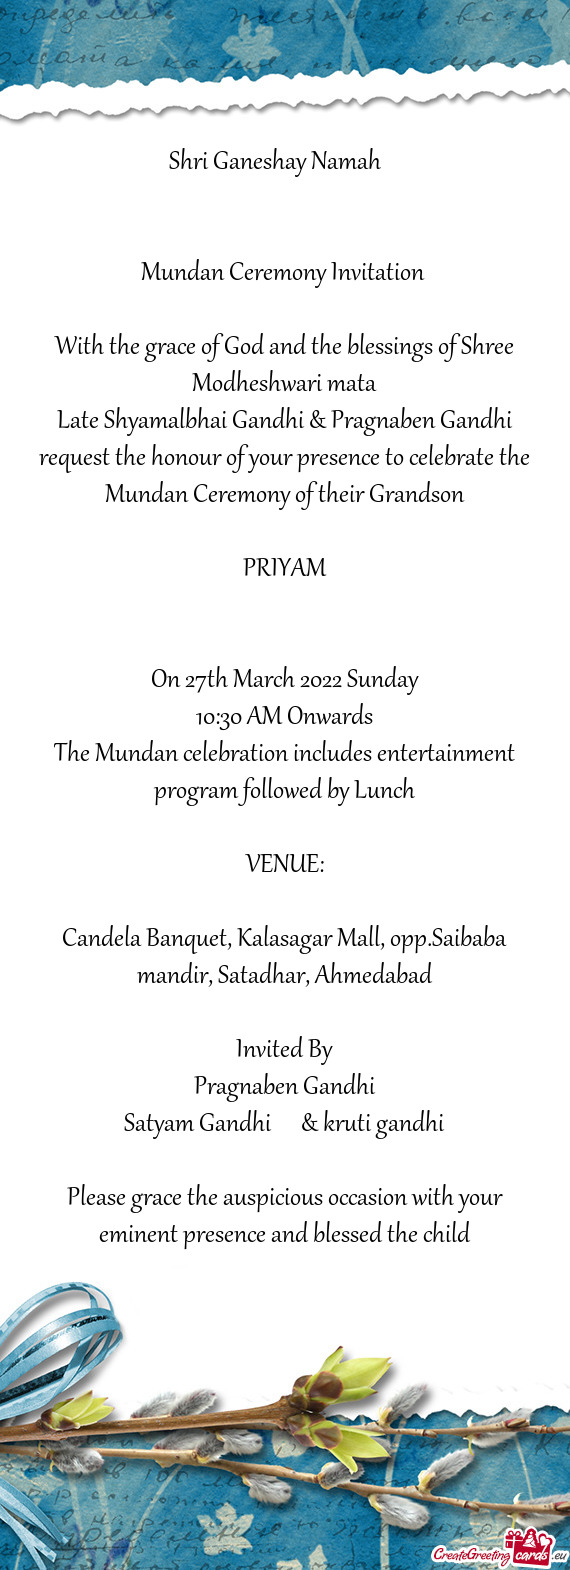 The Mundan celebration includes entertainment program followed by Lunch